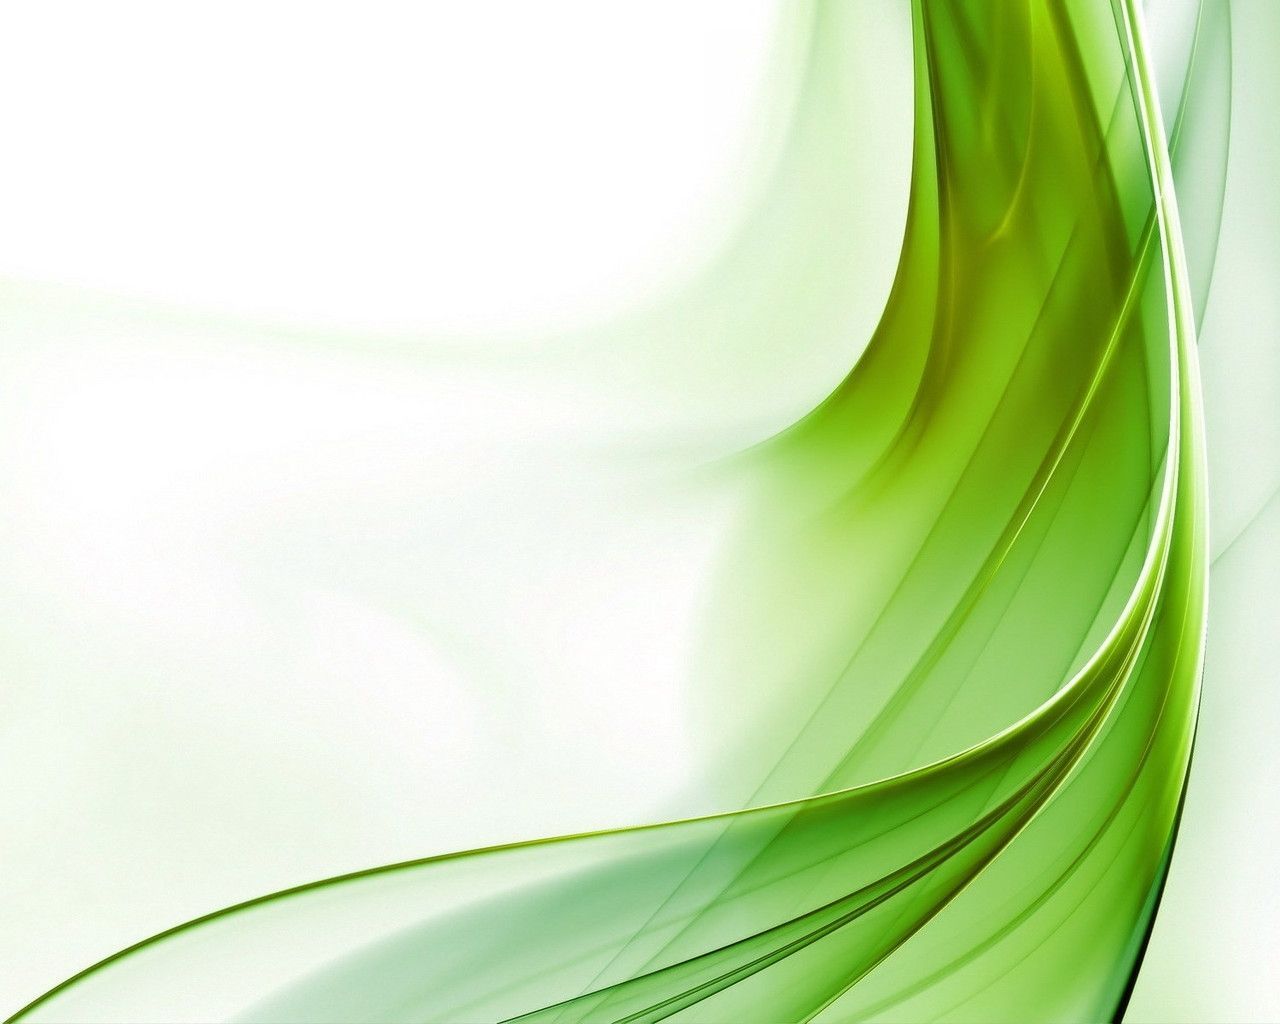 green white background design